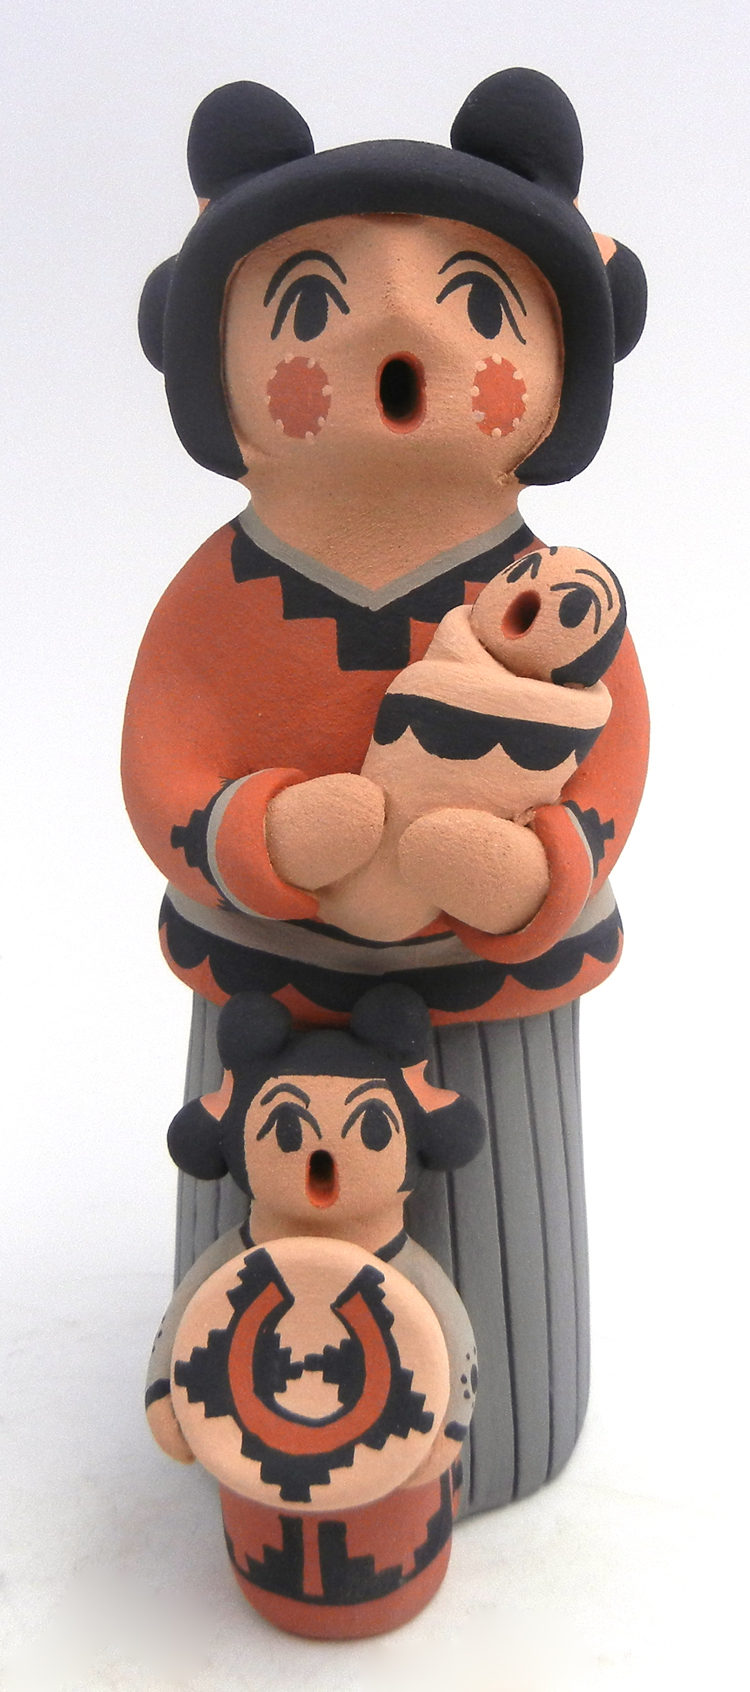 Jemez standing storyteller figurine with two children by Chrislyn Fragua